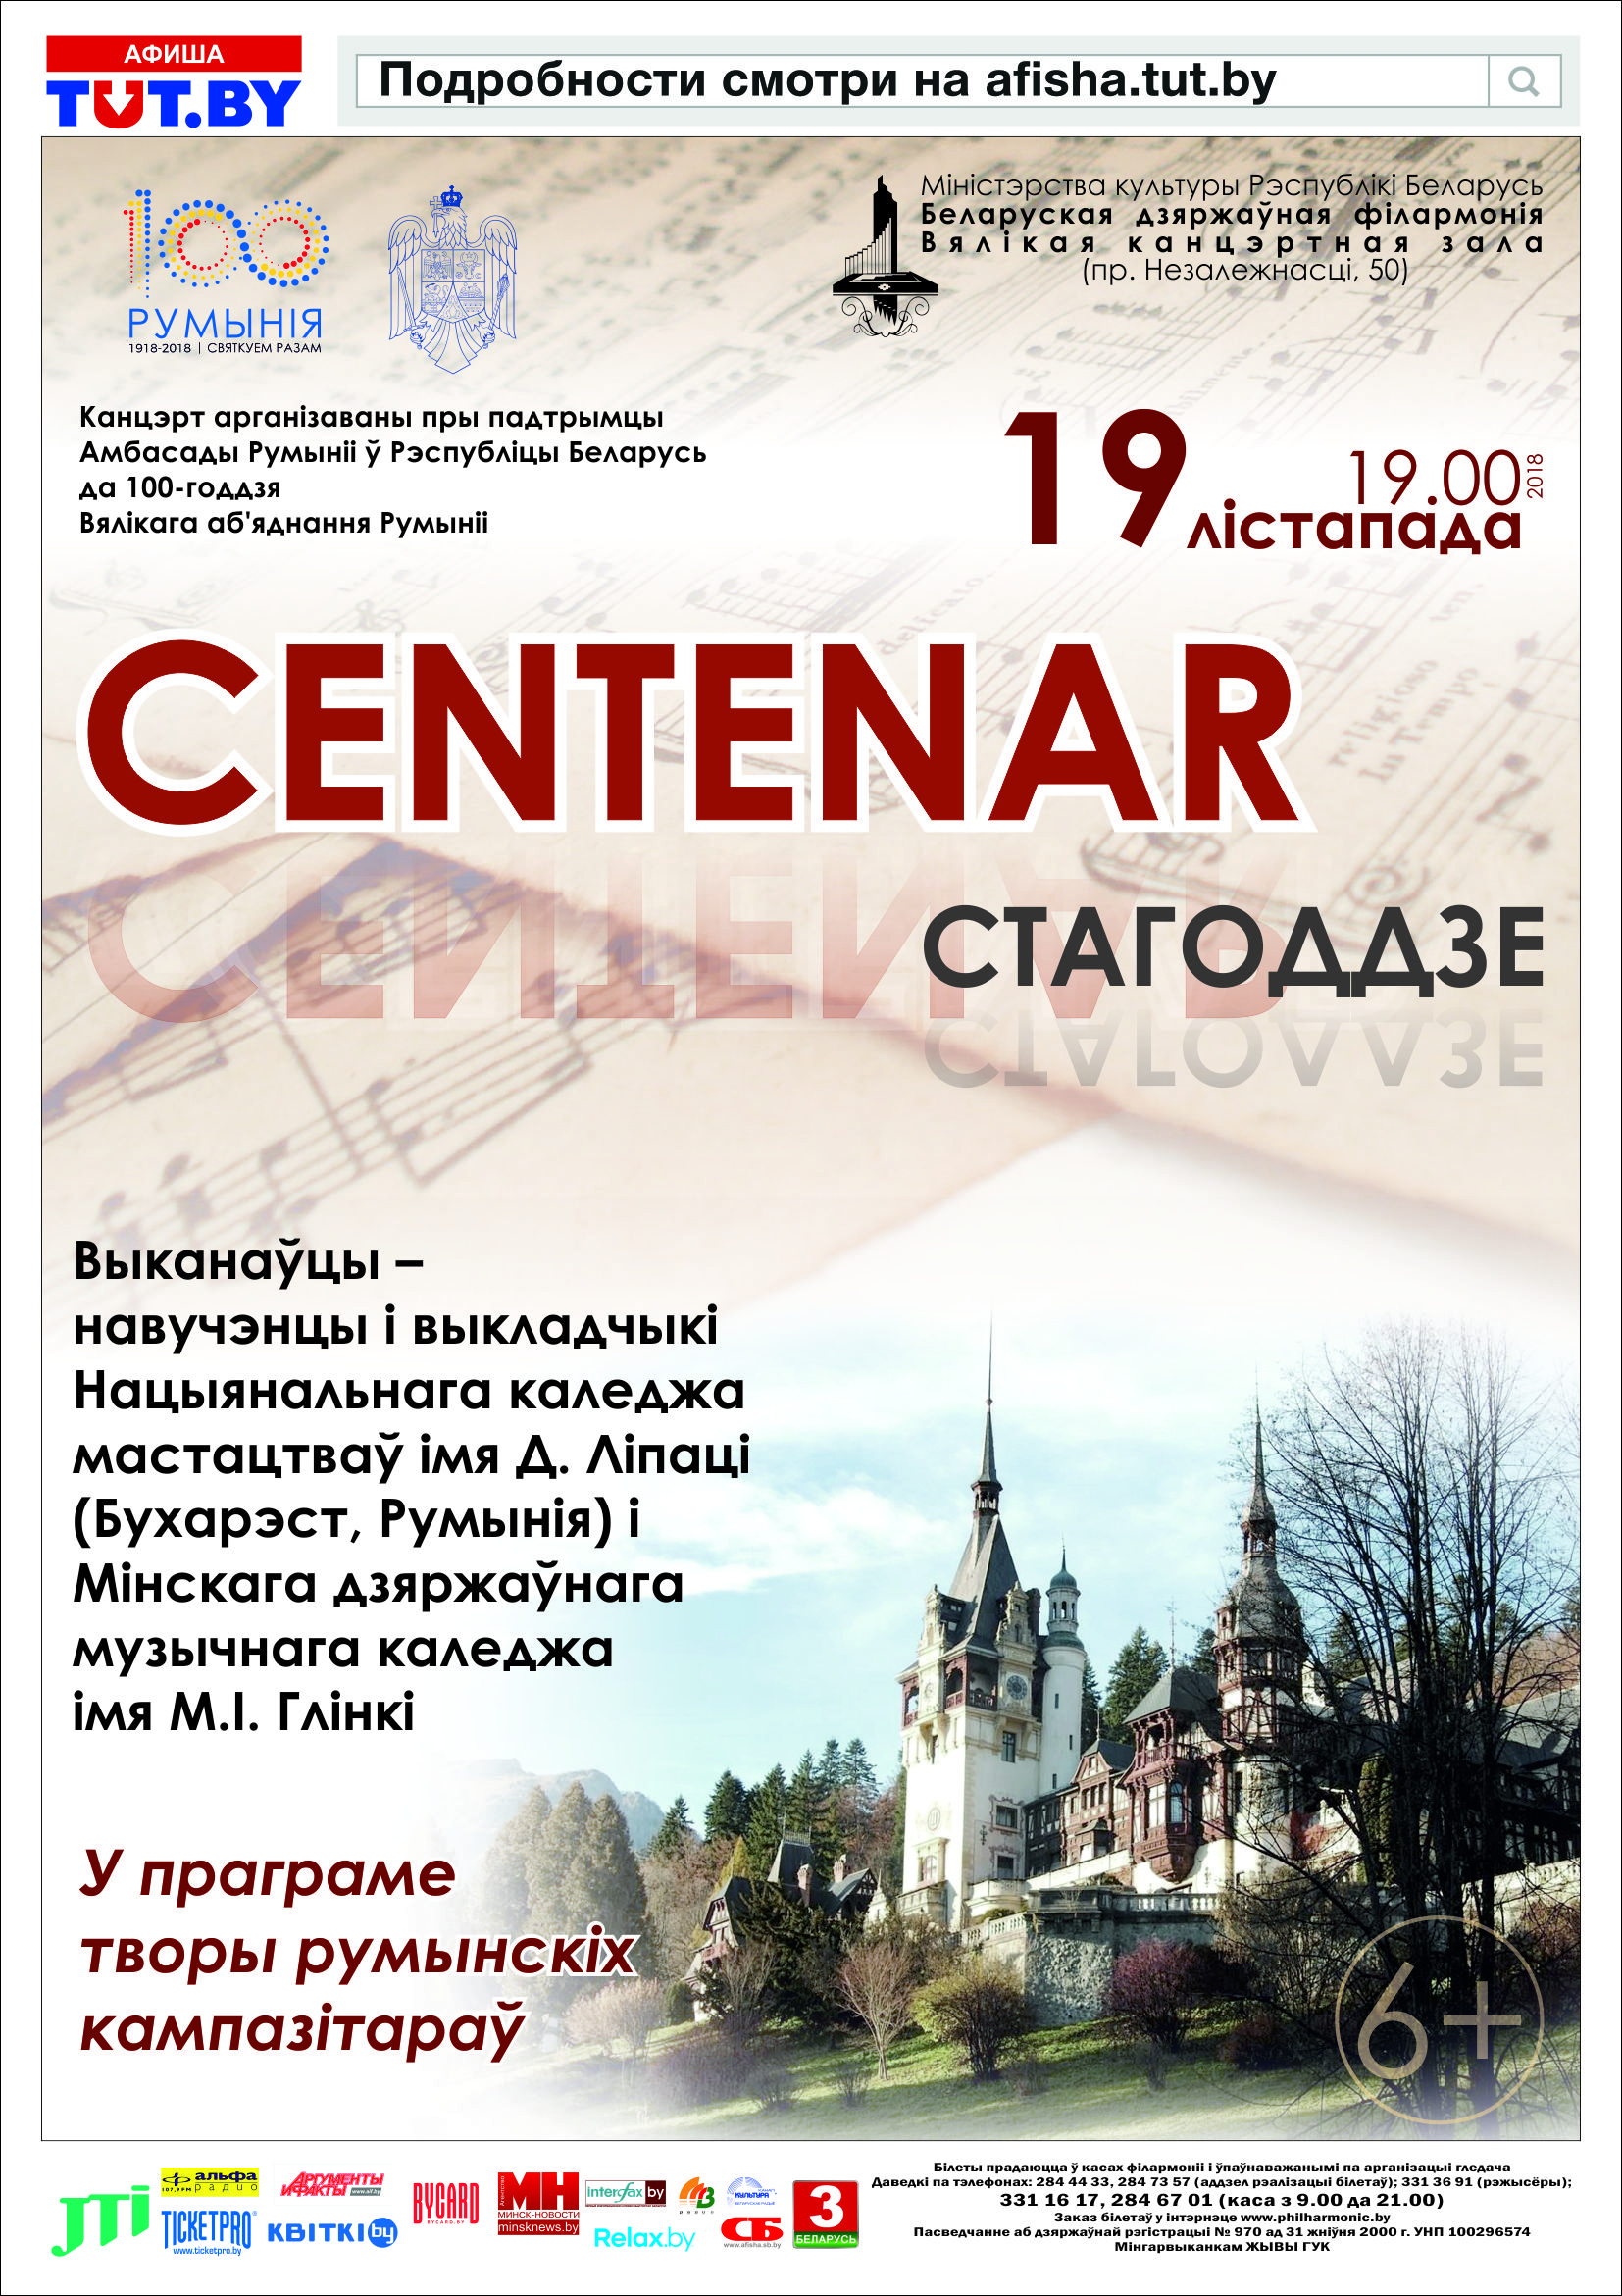 AFIS Centenar Belarus